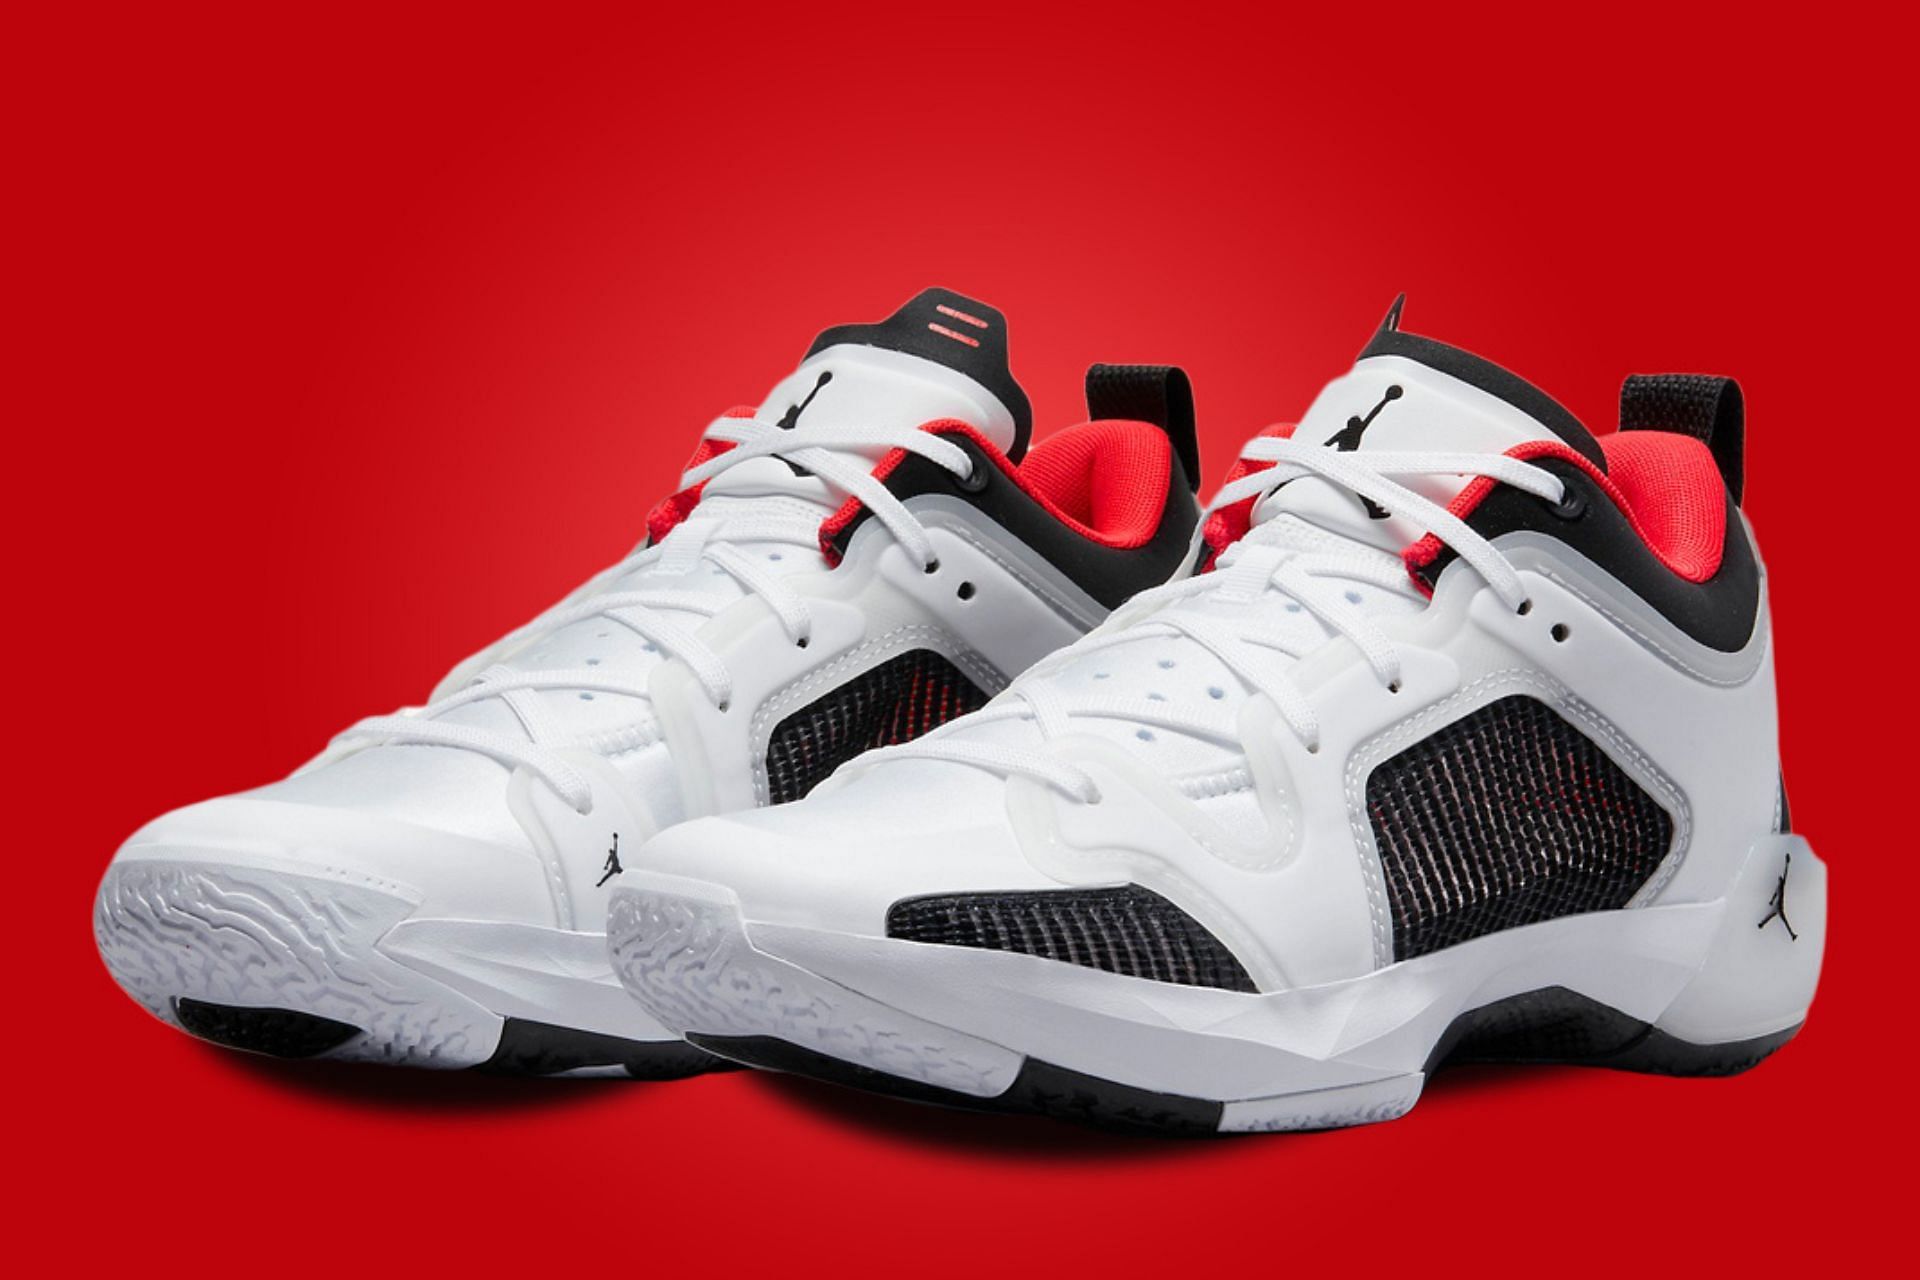 Air Jordan 37 Low White Black Siren Red shoes (Image via Nike)